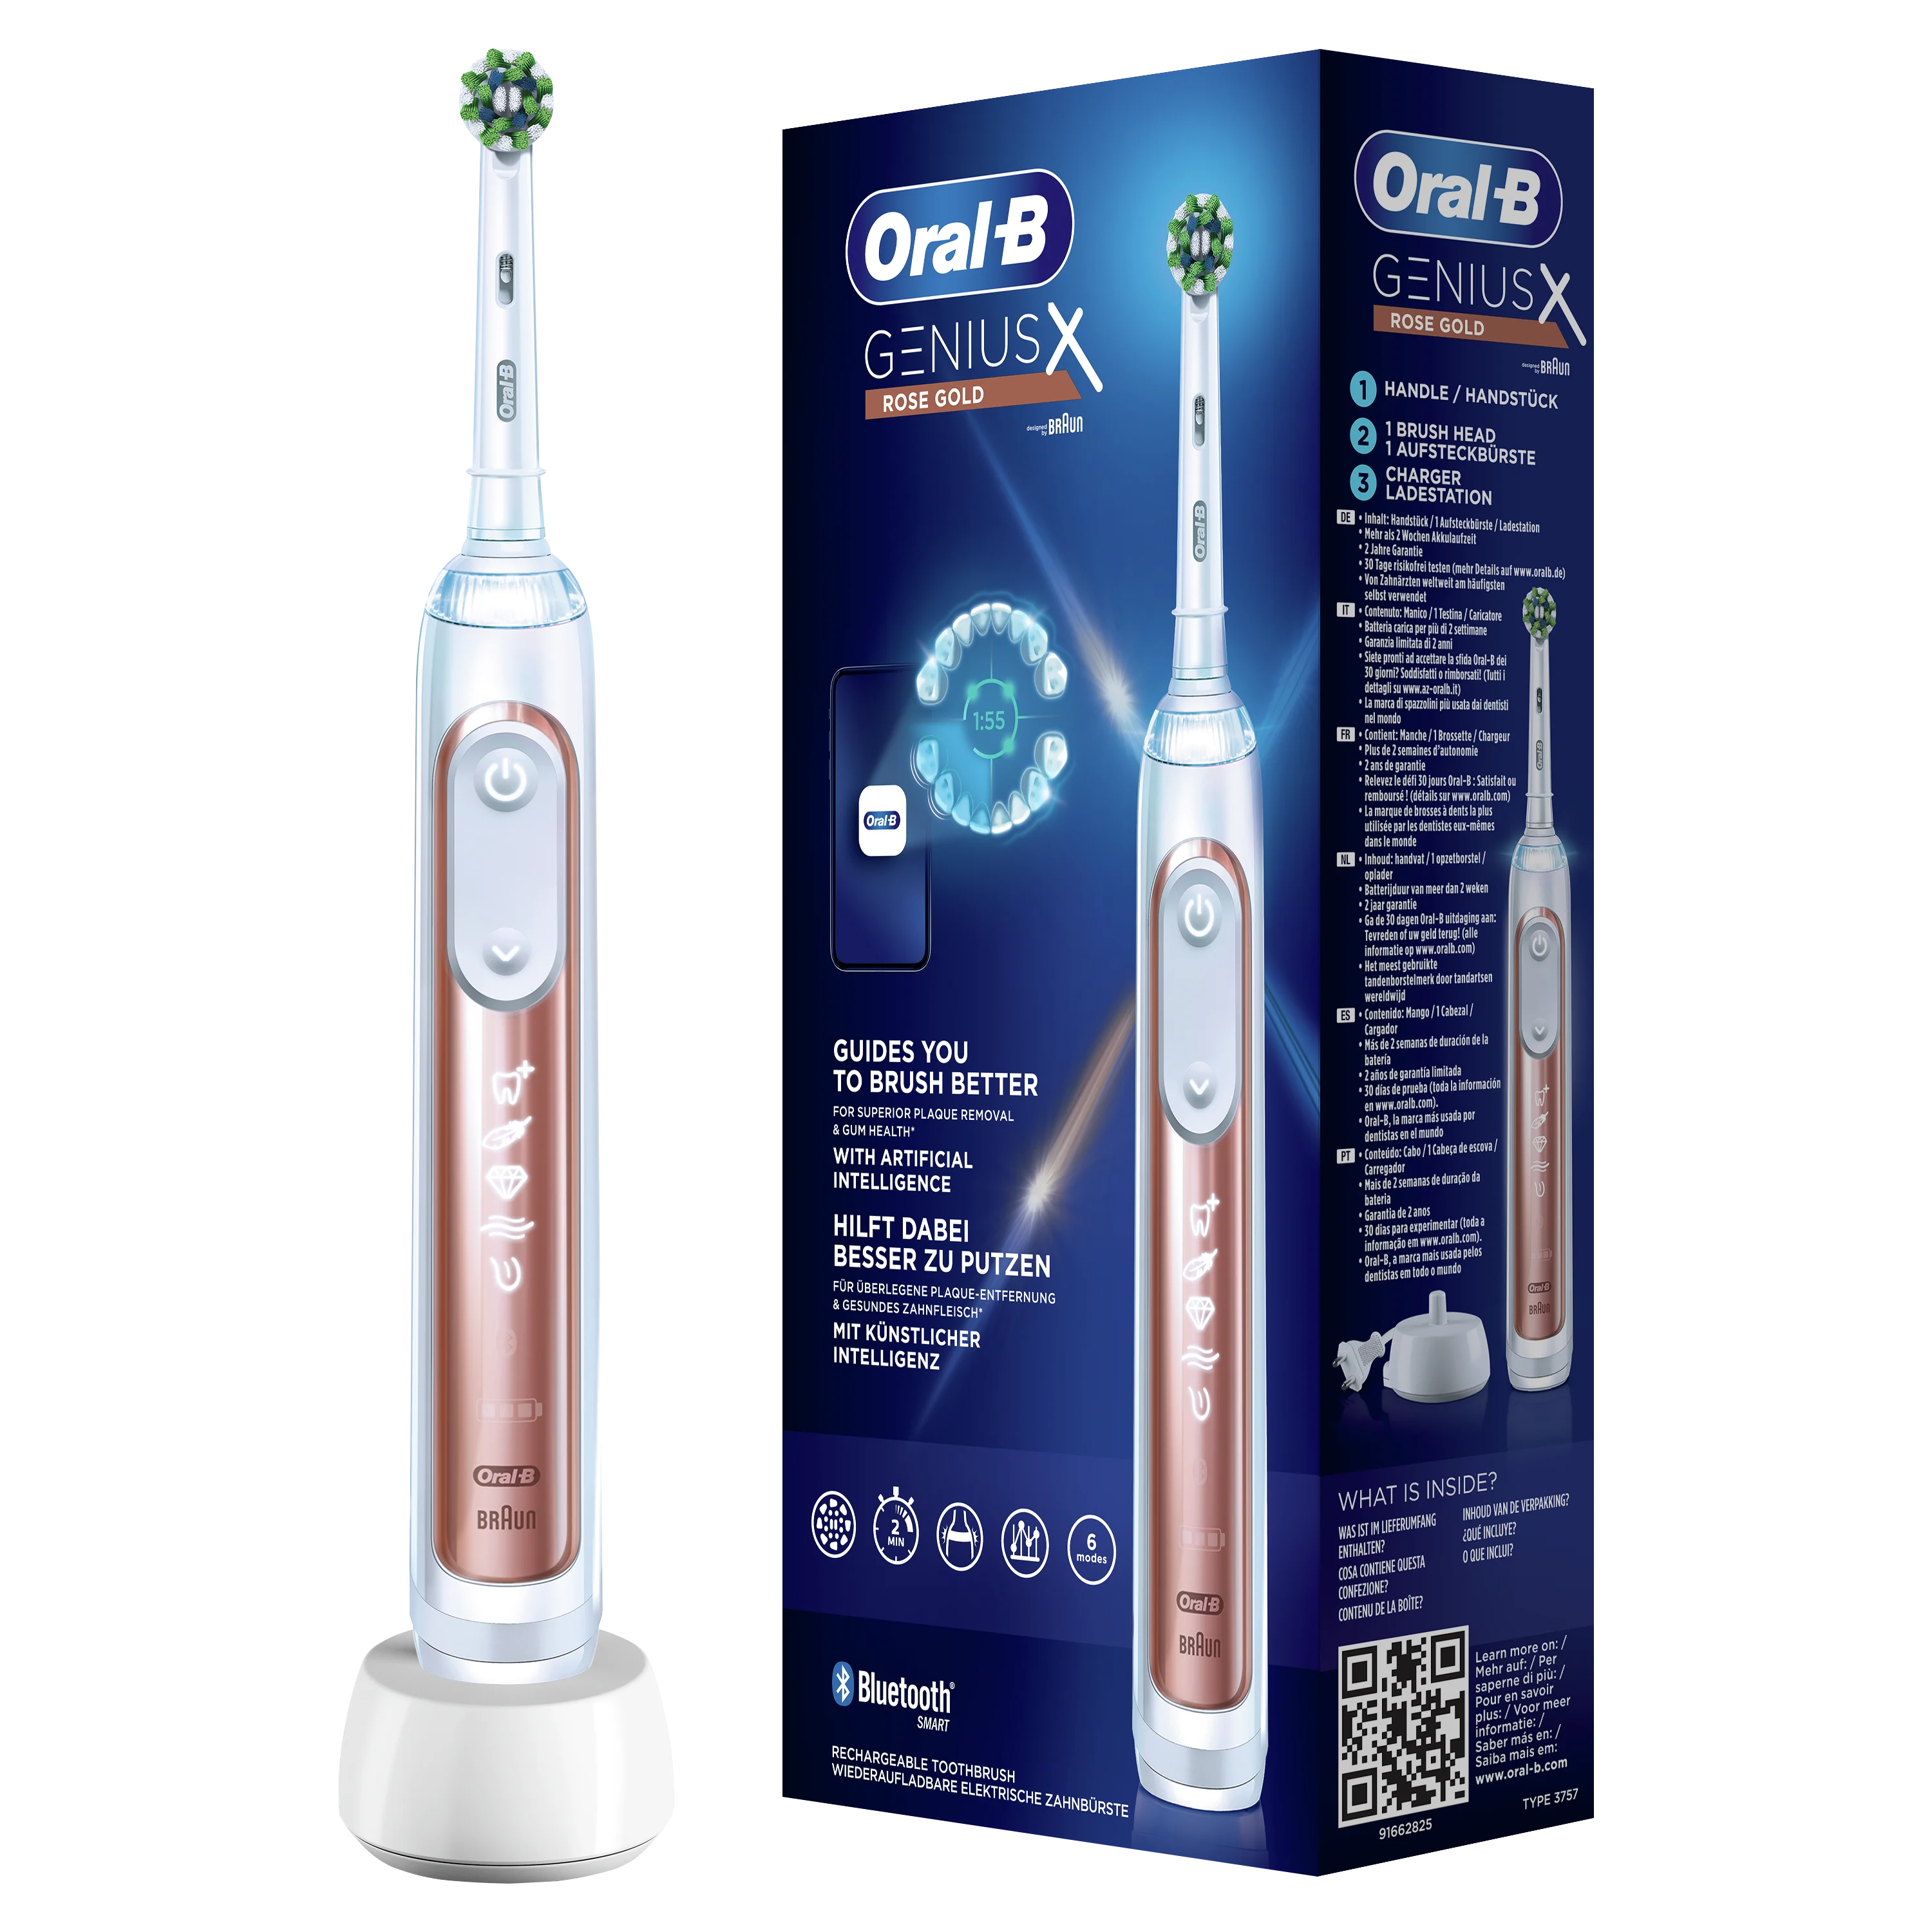 Blind Potentieel trimmen Oral-B Speciale Editie Genius X Elektrische Tandenborstel | Oral-B